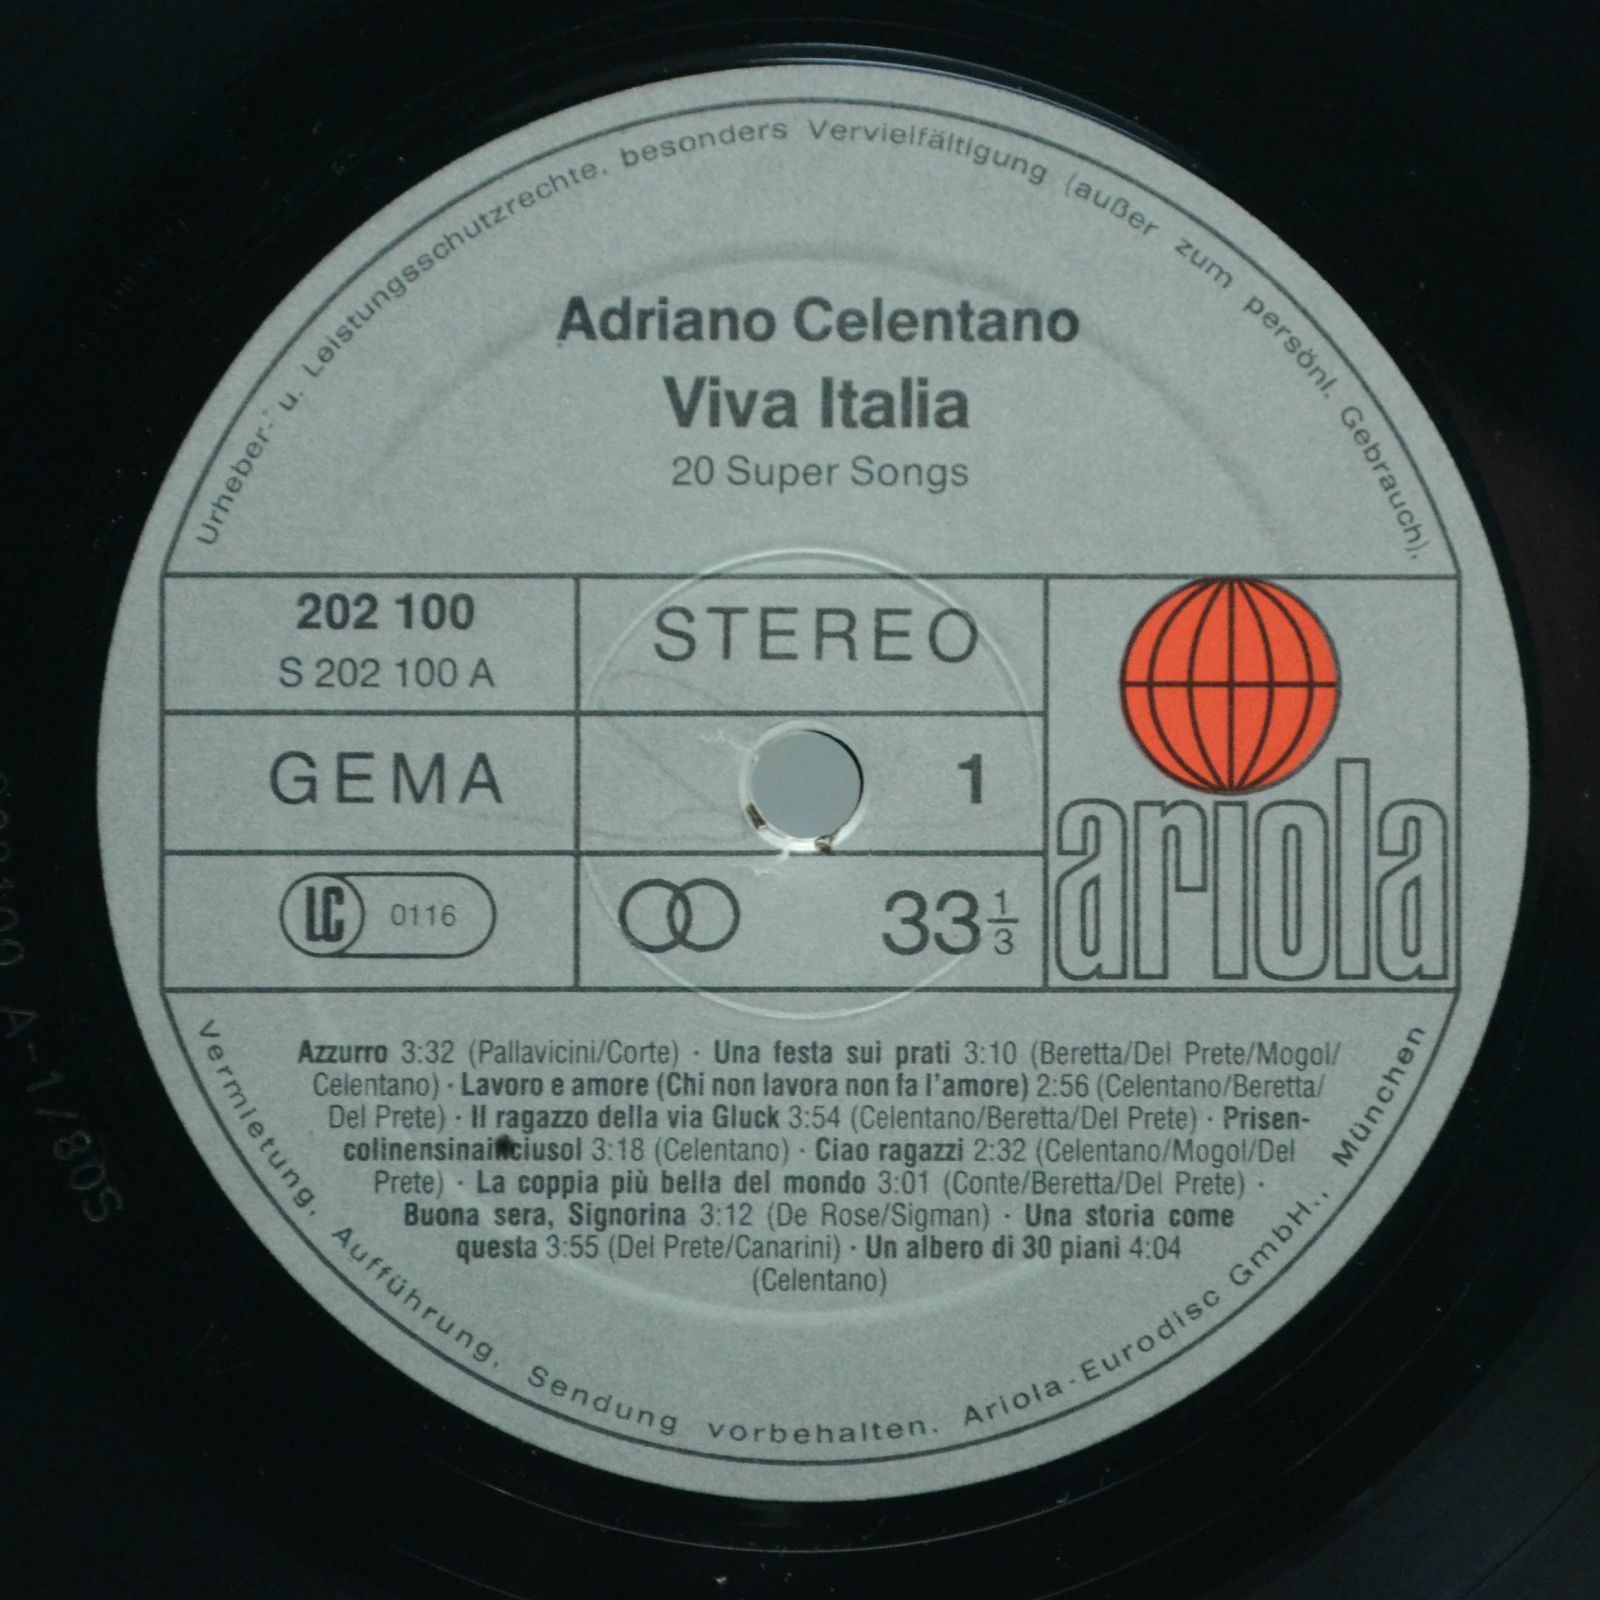 Adriano Celentano — Viva Italia (20 Super Songs), 1980